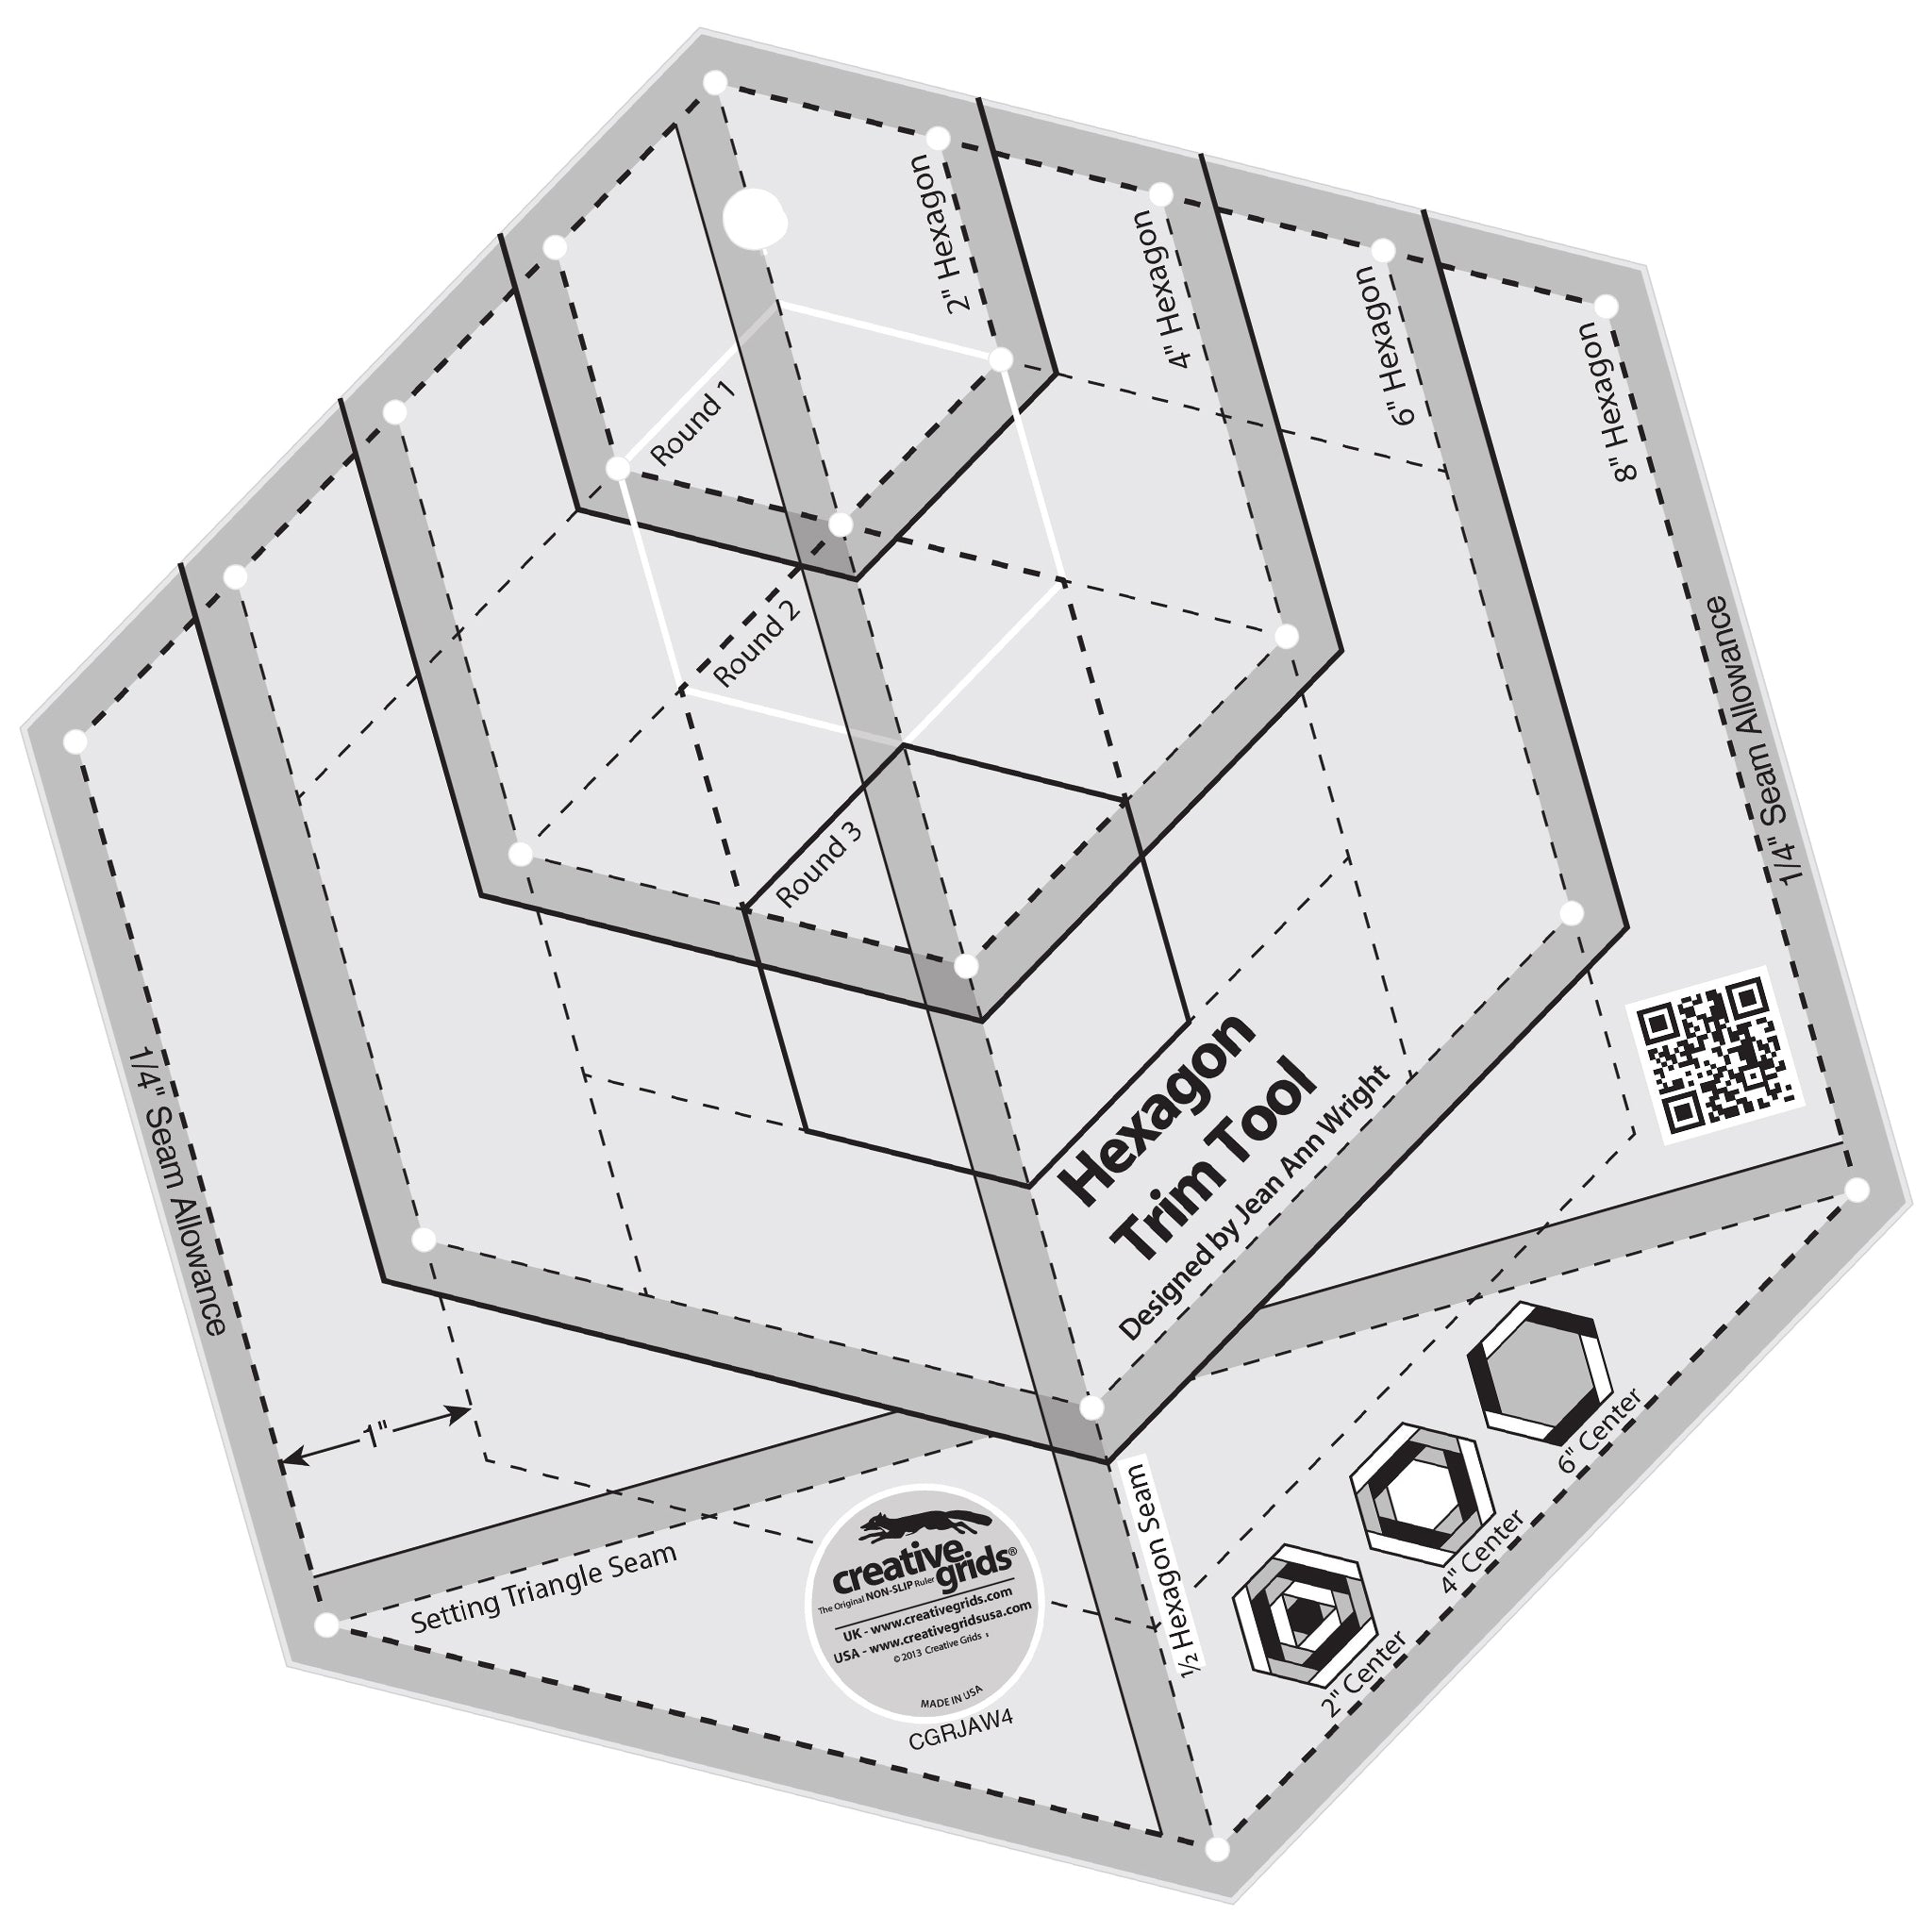 Hexagon Quilting Template Set, 1, 2, 3, 4, 5, 6, 7, 8, 9, 10, 11, 12 with 1/4 Seam Allowance